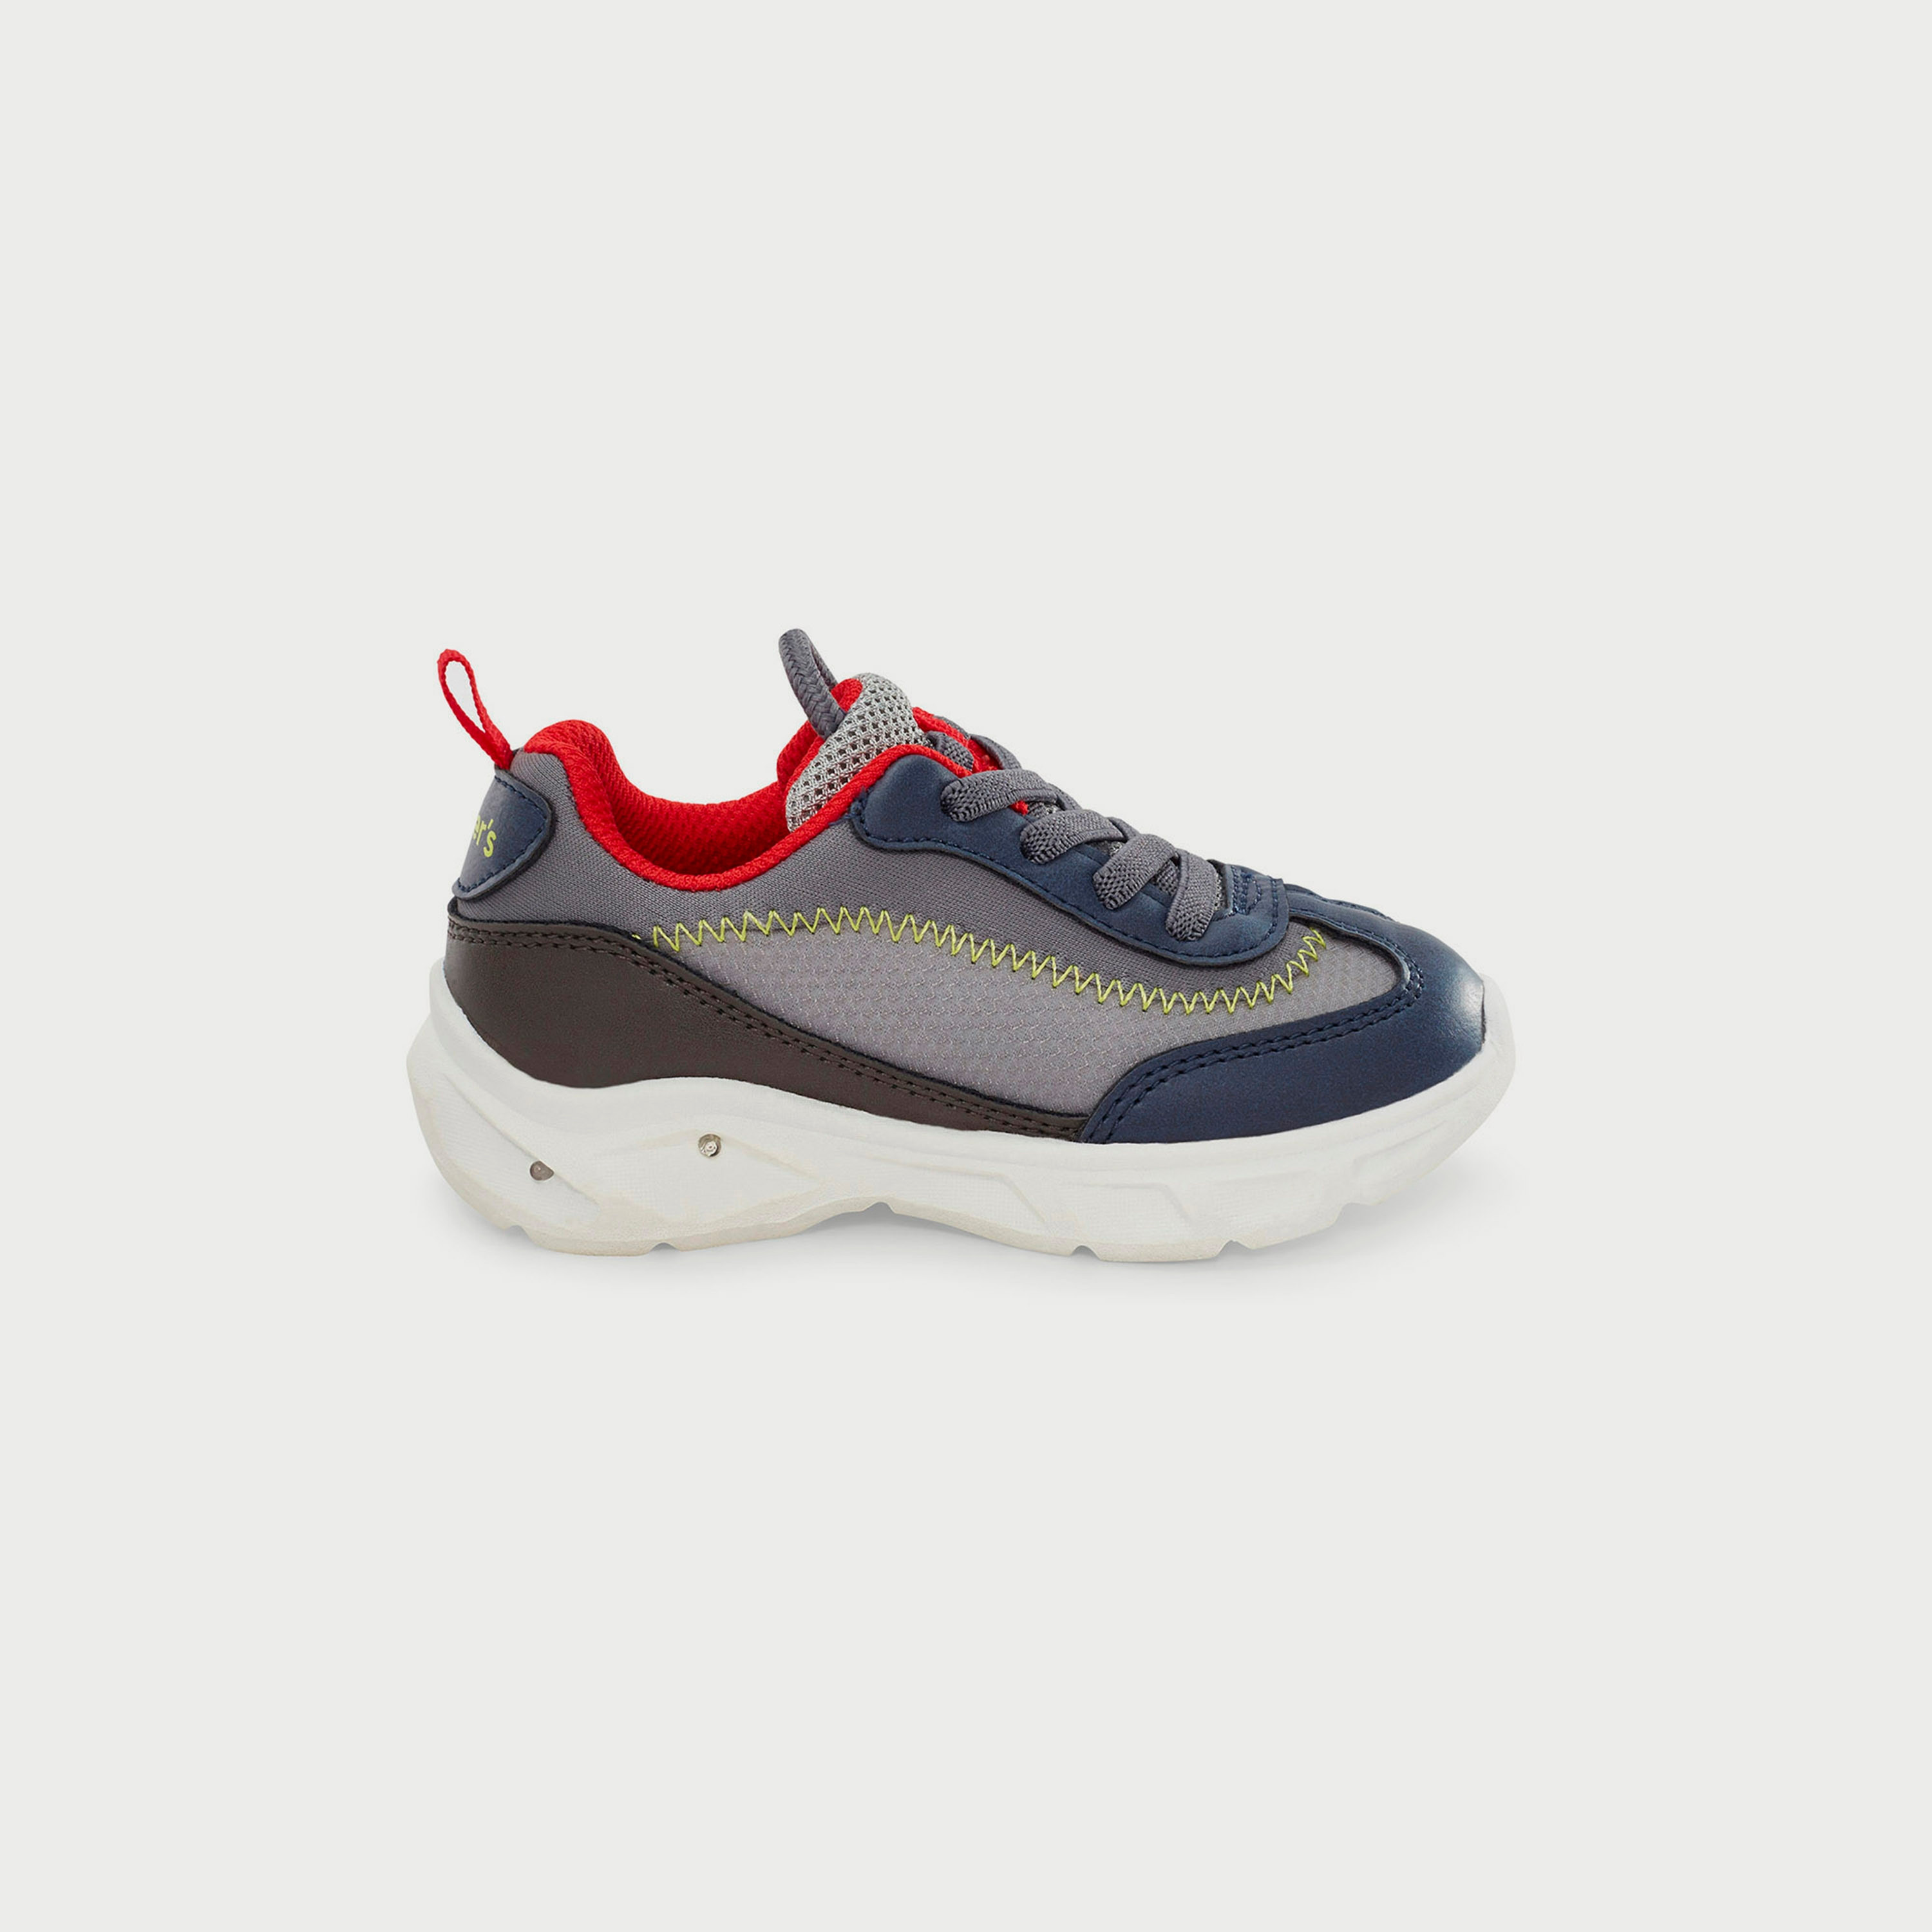 Buy Men Tan Casual Sneakers Online | SKU: 71-8813-23-40-Metro Shoes